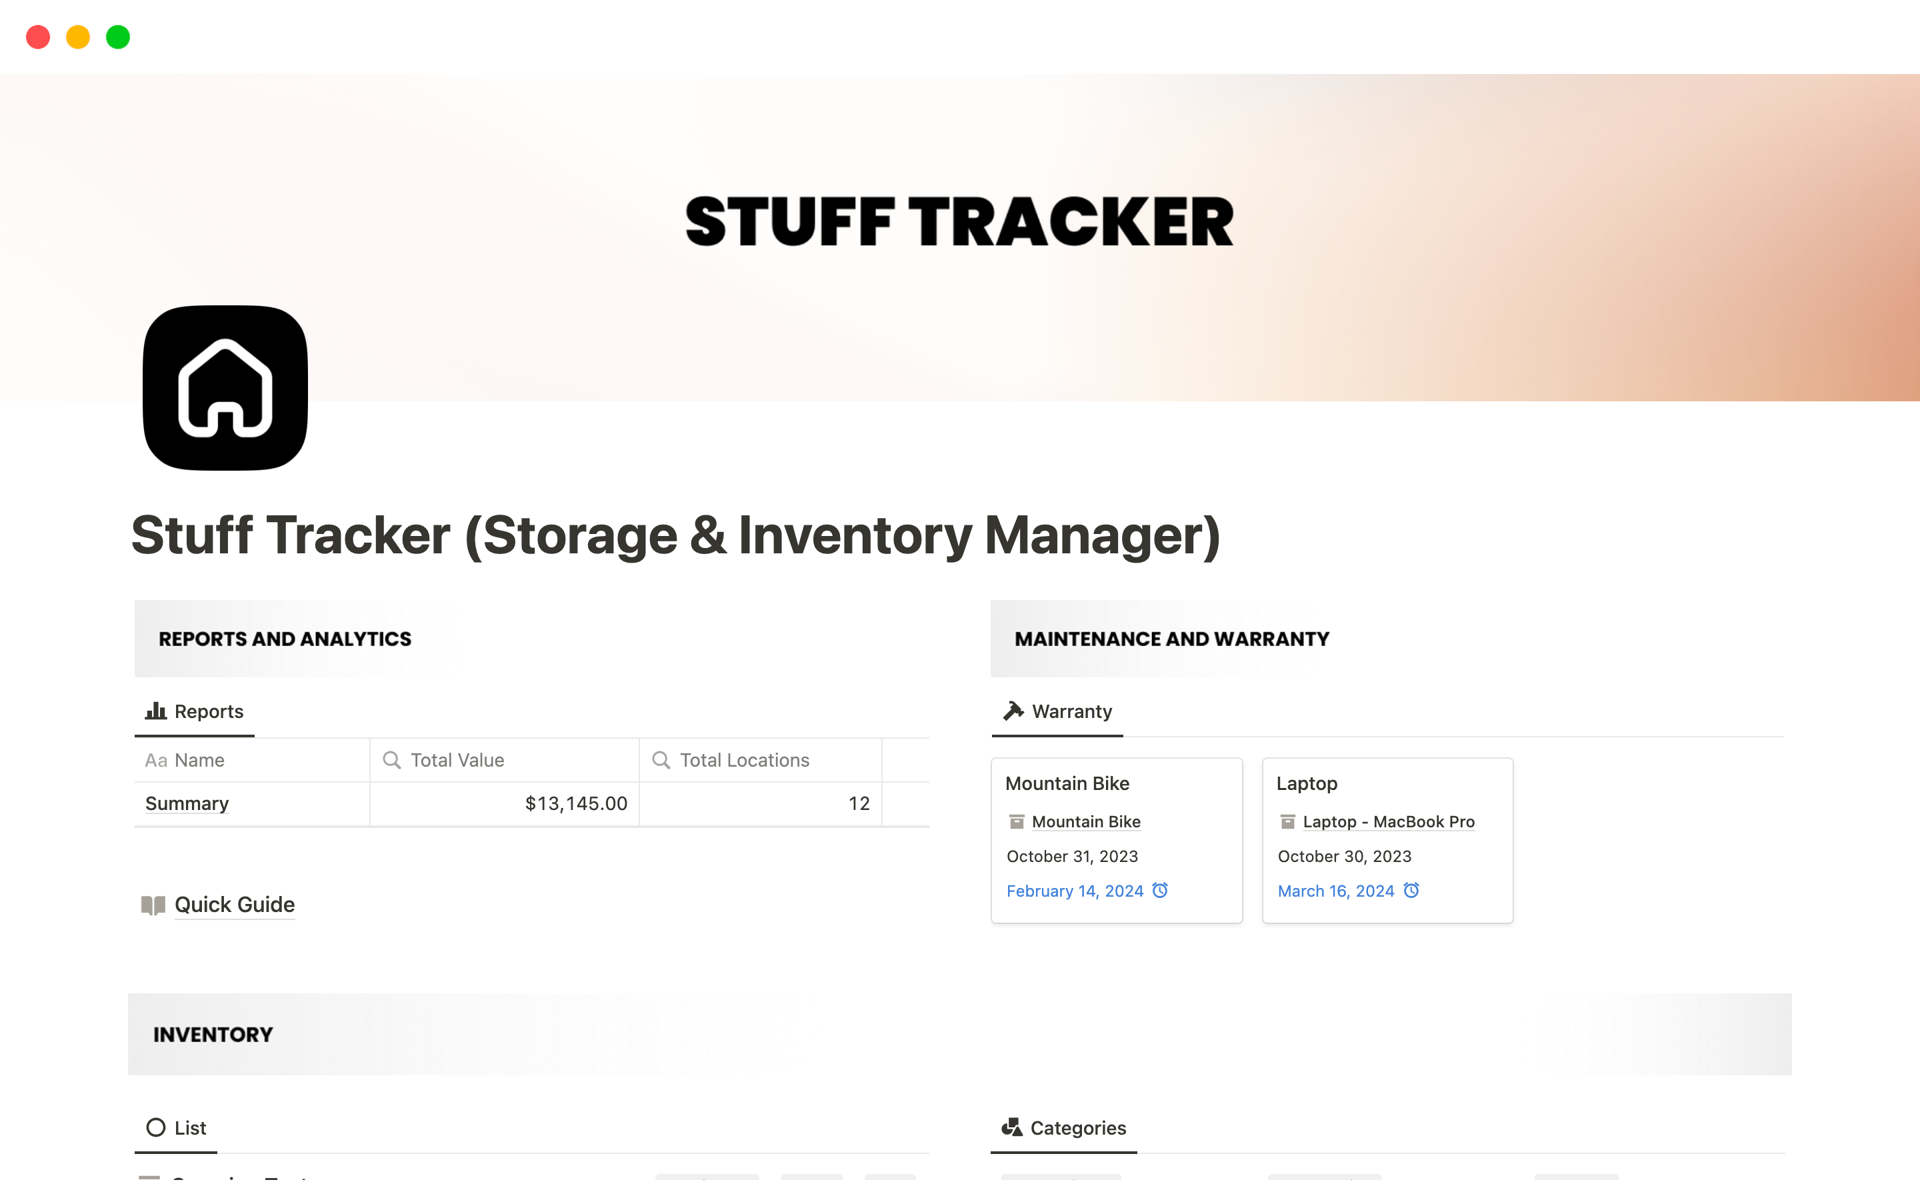 Vista previa de plantilla para Stuff Tracker (Storage & Inventory Manager)